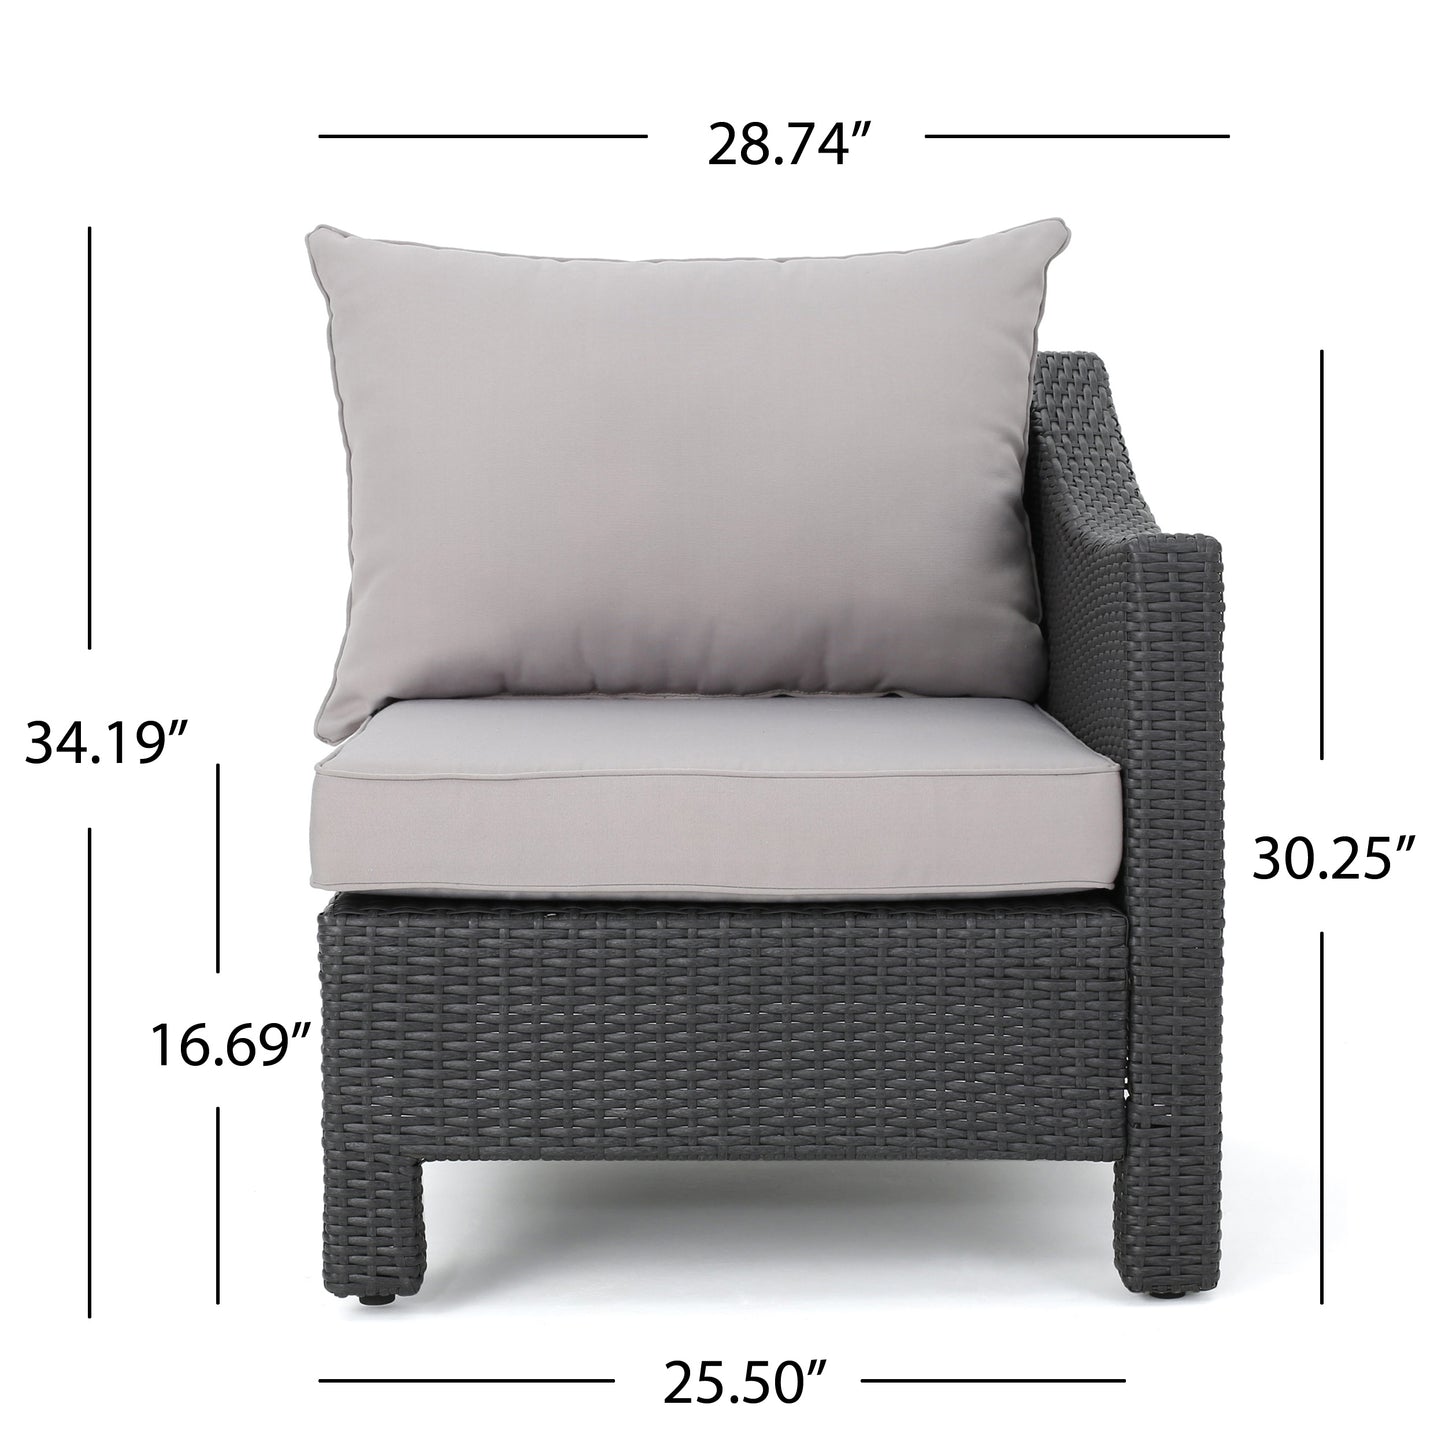 Caspian 6pc Outdoor Wicker V-shaped Sectional Sofa Set w/ Cushions